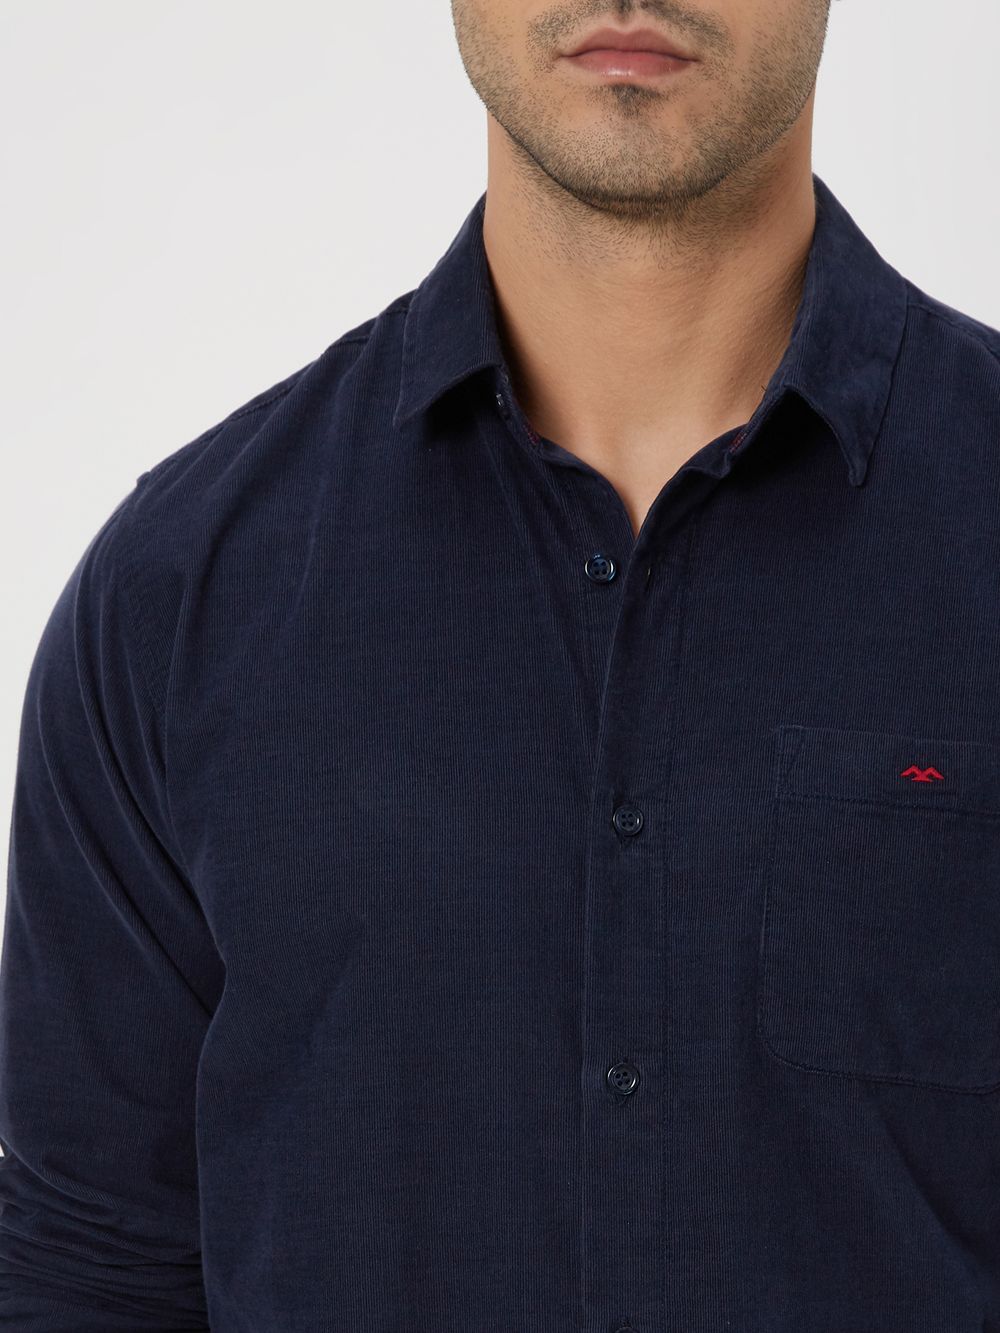 Navy Textured Plain Corduroy Shirt